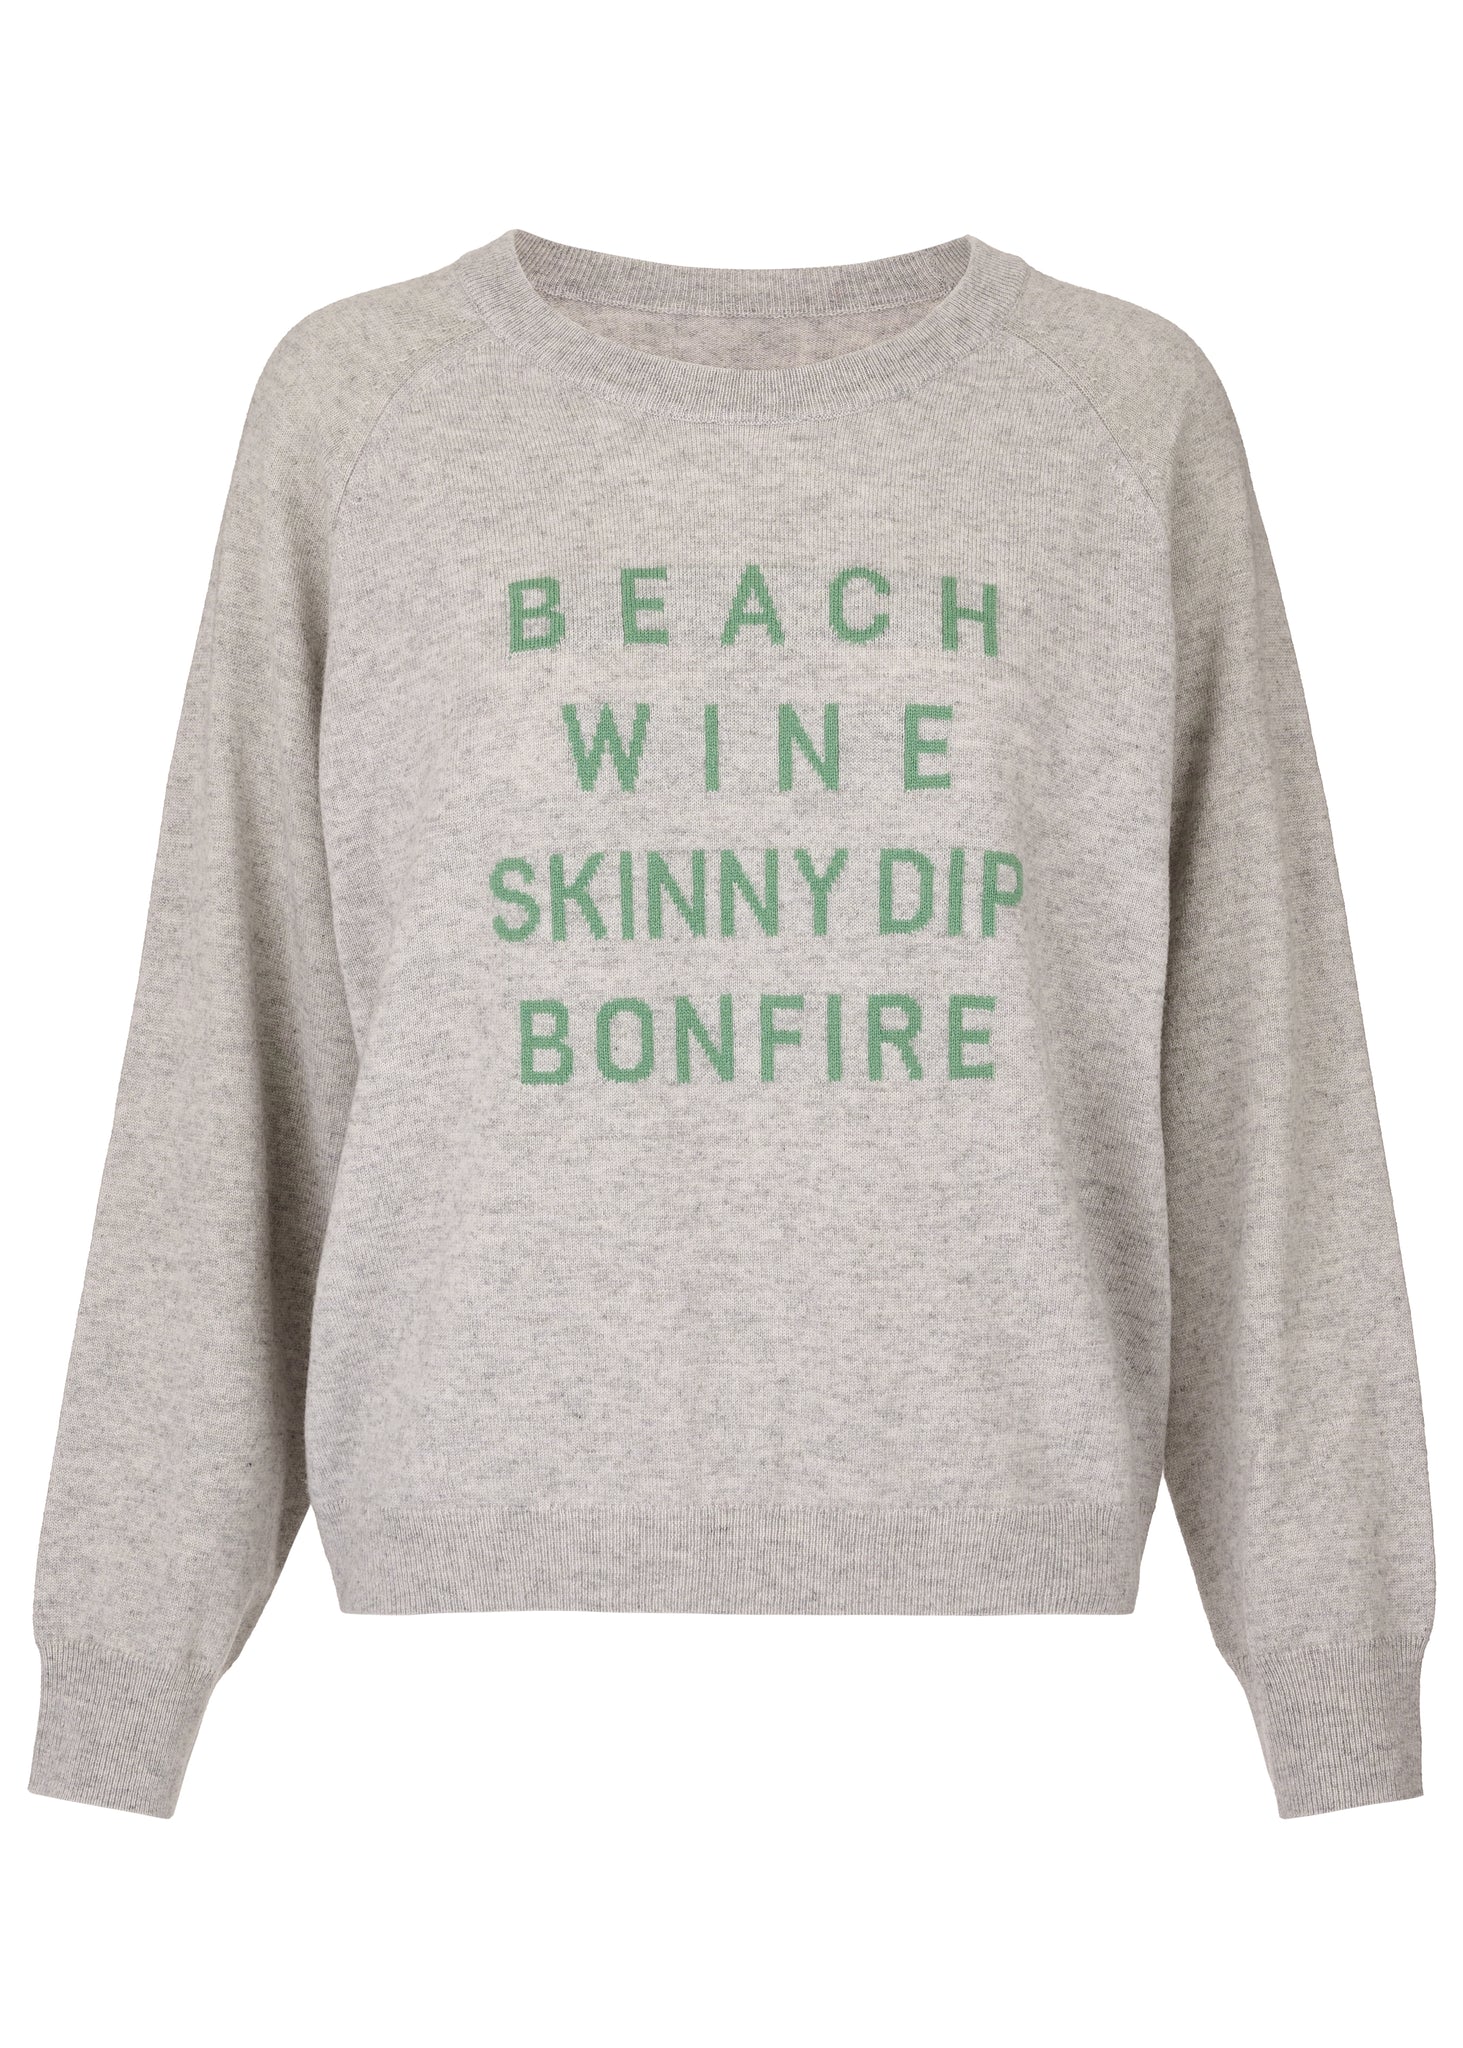 Light grey cashmere blend jumper with khaki slogan on front saying beach wine skinny dip bonfire